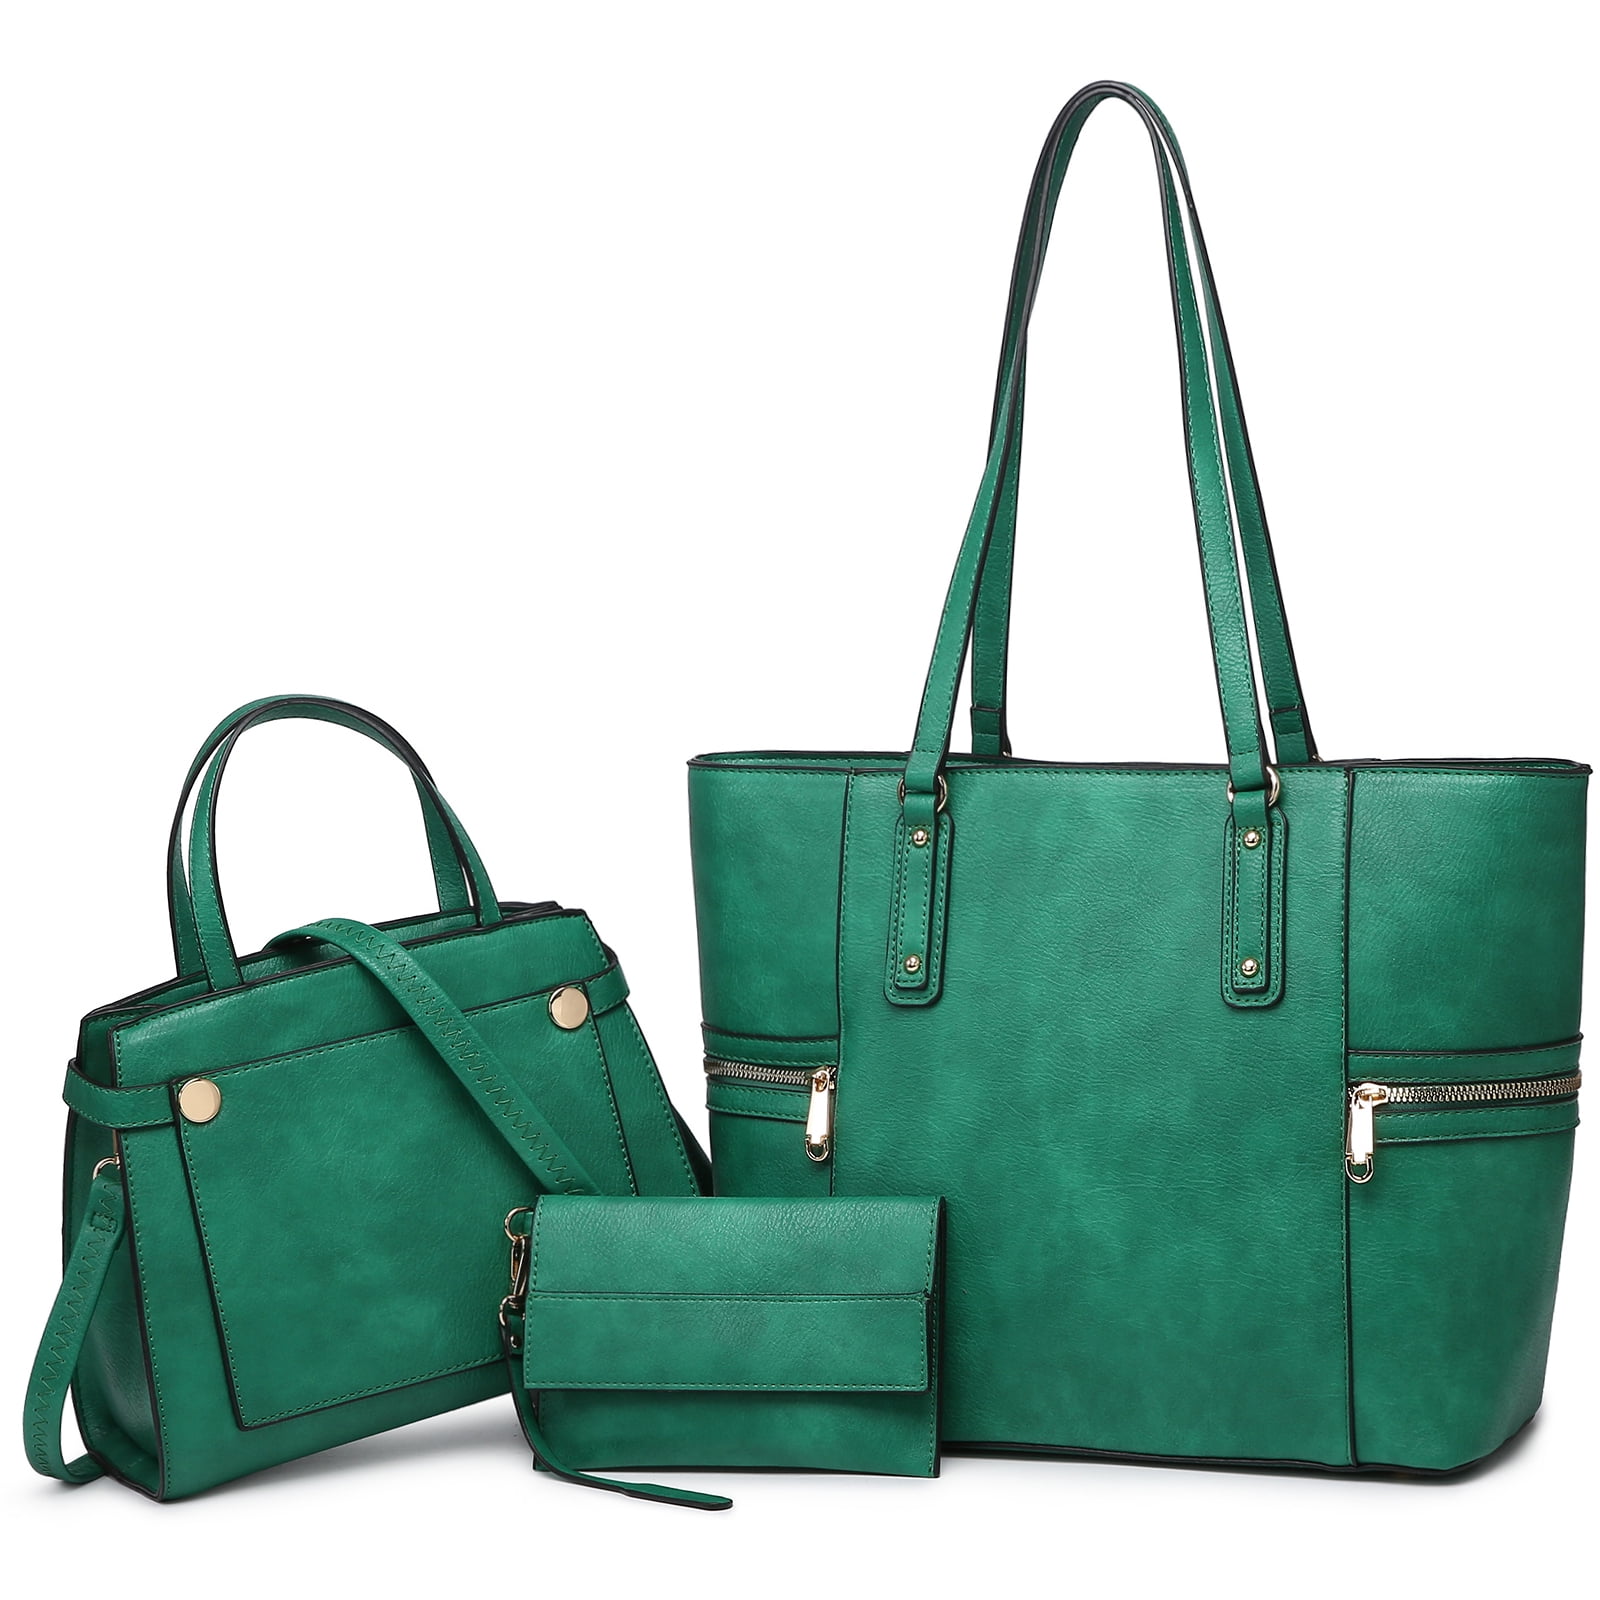 M Marco Women's Handbag 3pcs Set Fashion Tote Bag with Matching Satchel Bag  and Wristlet 